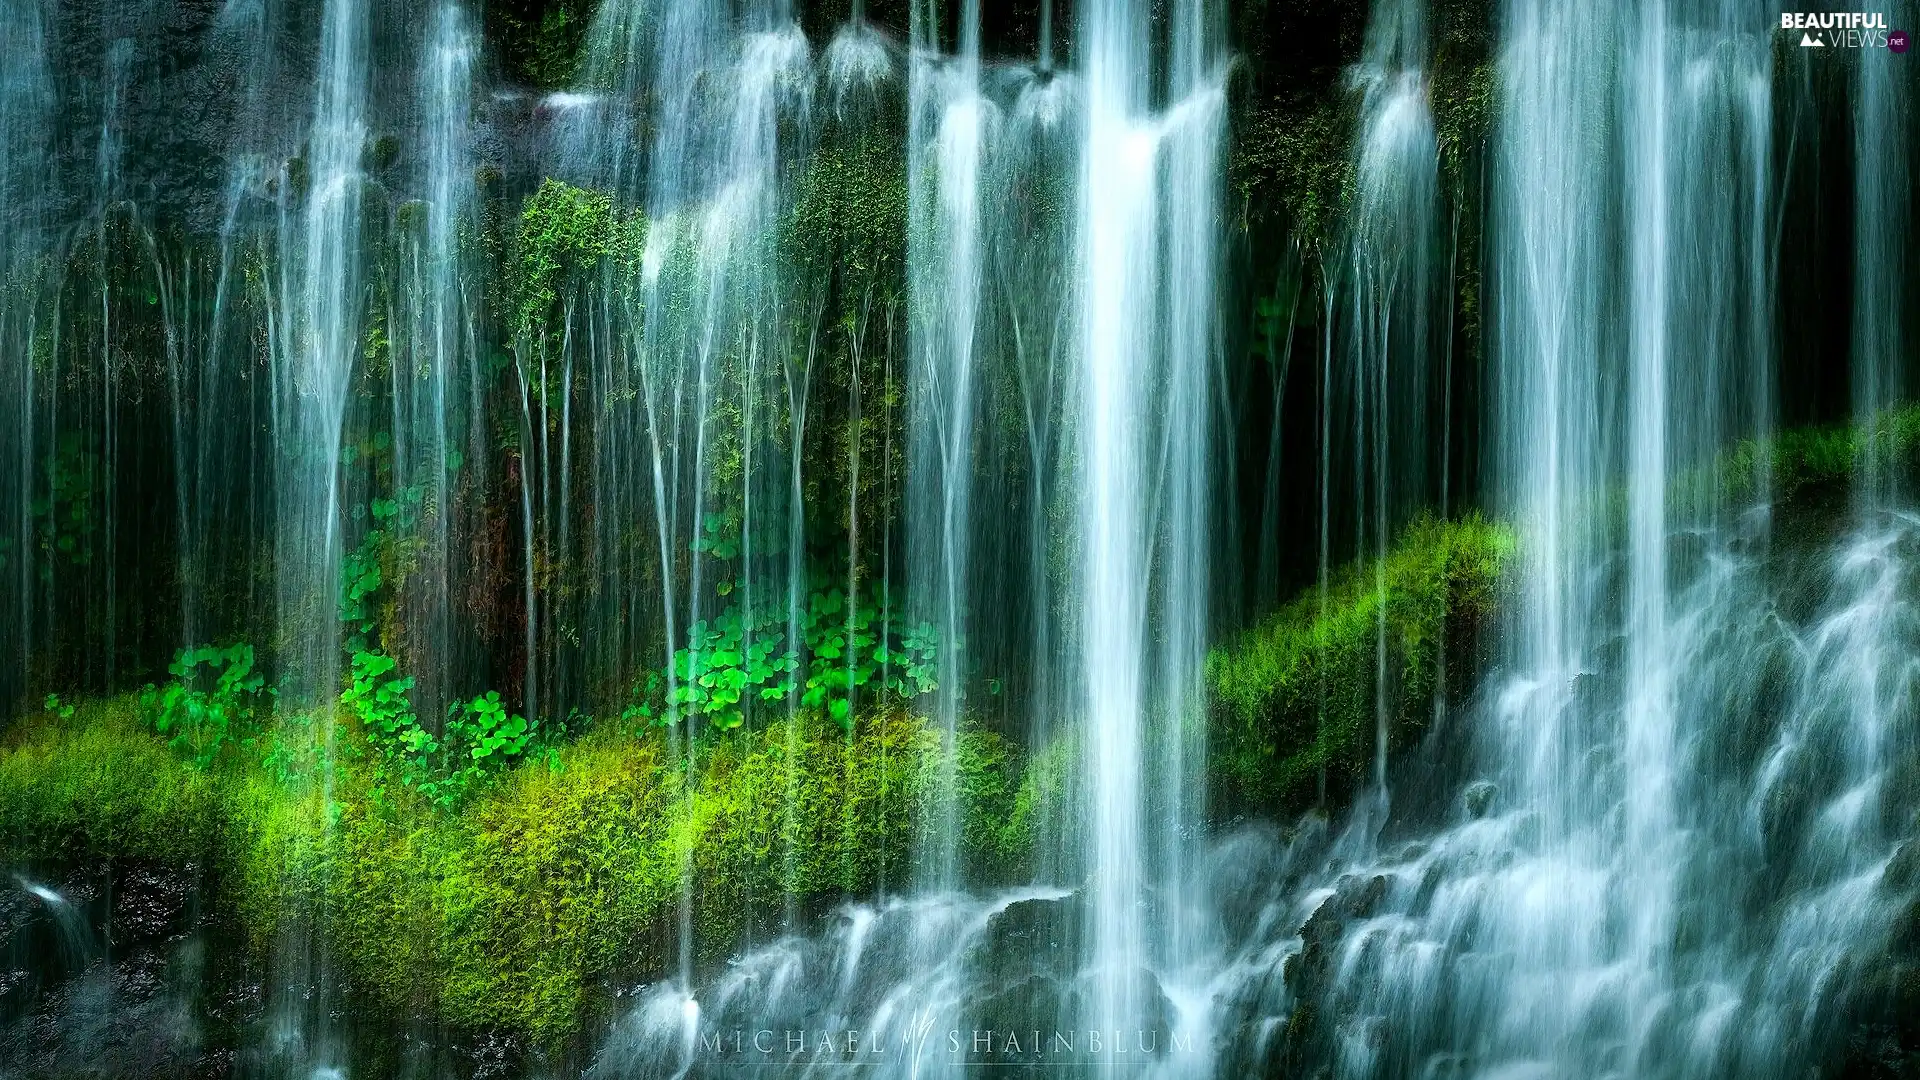 Plants, waterfall, green ones